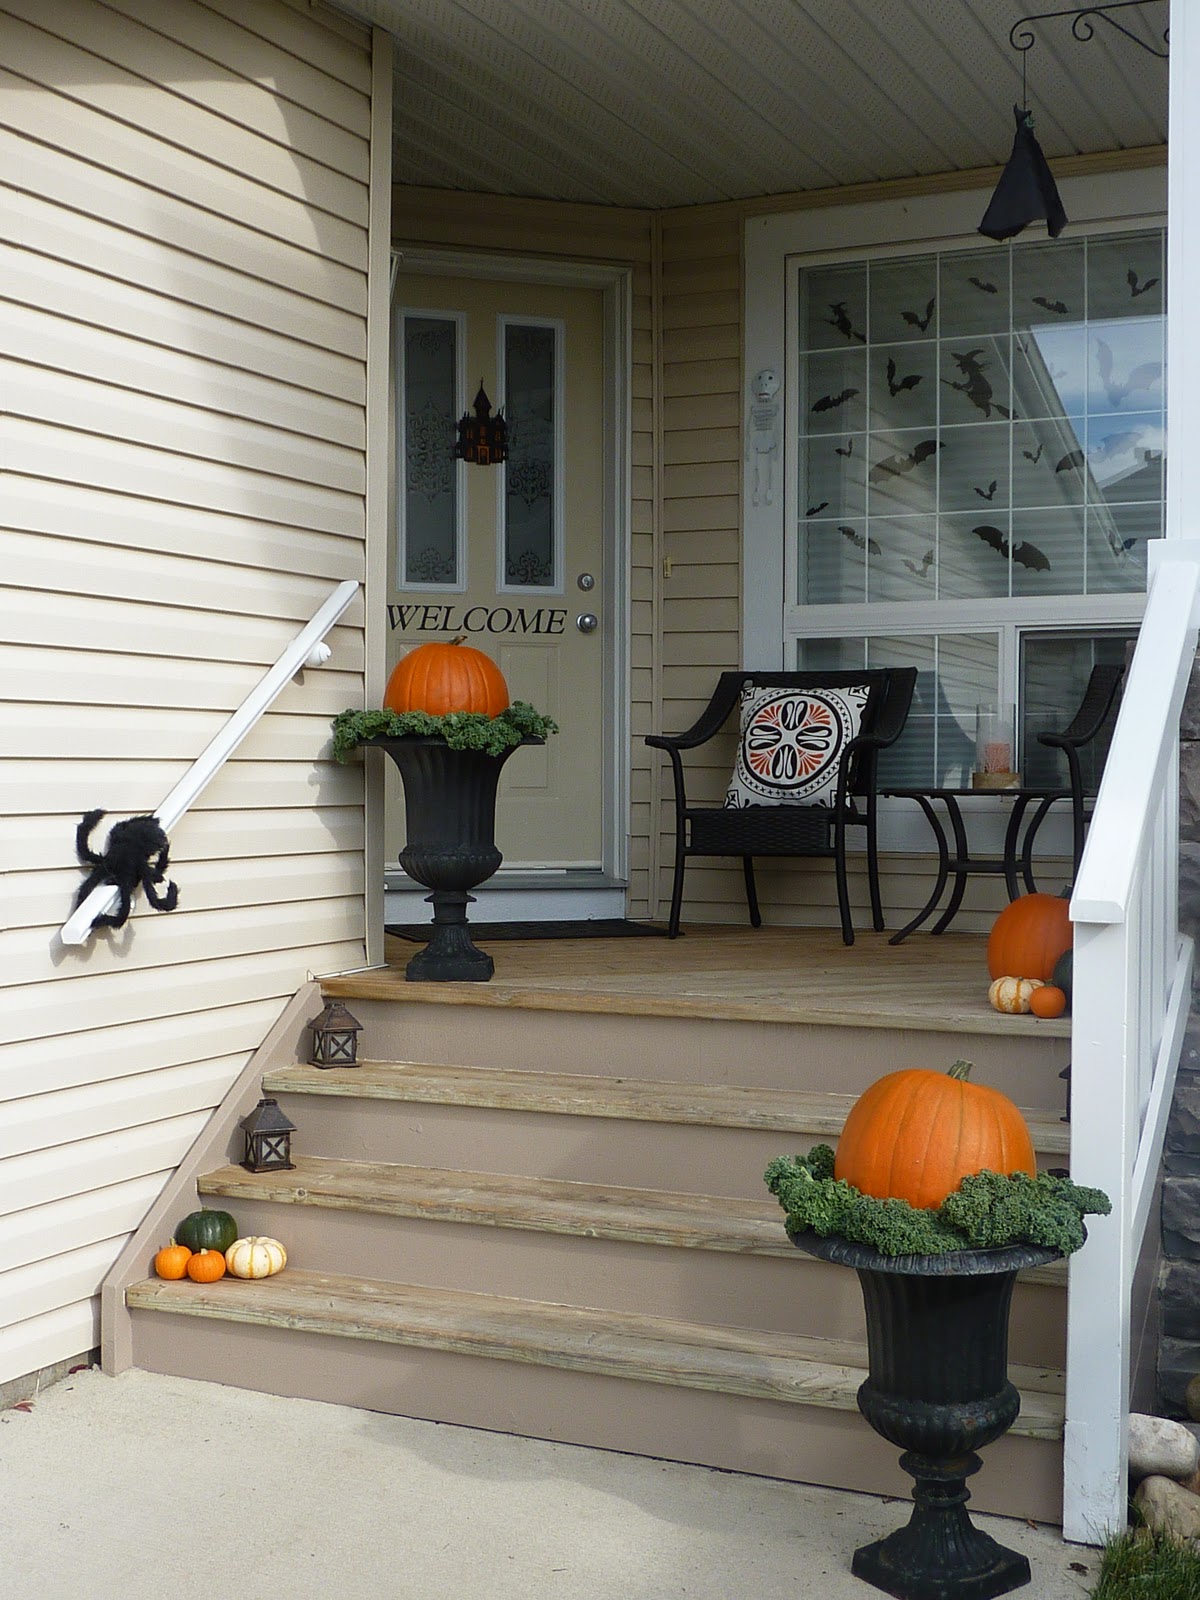 My Crafty Days: Fall/ Halloween Porch Decoration